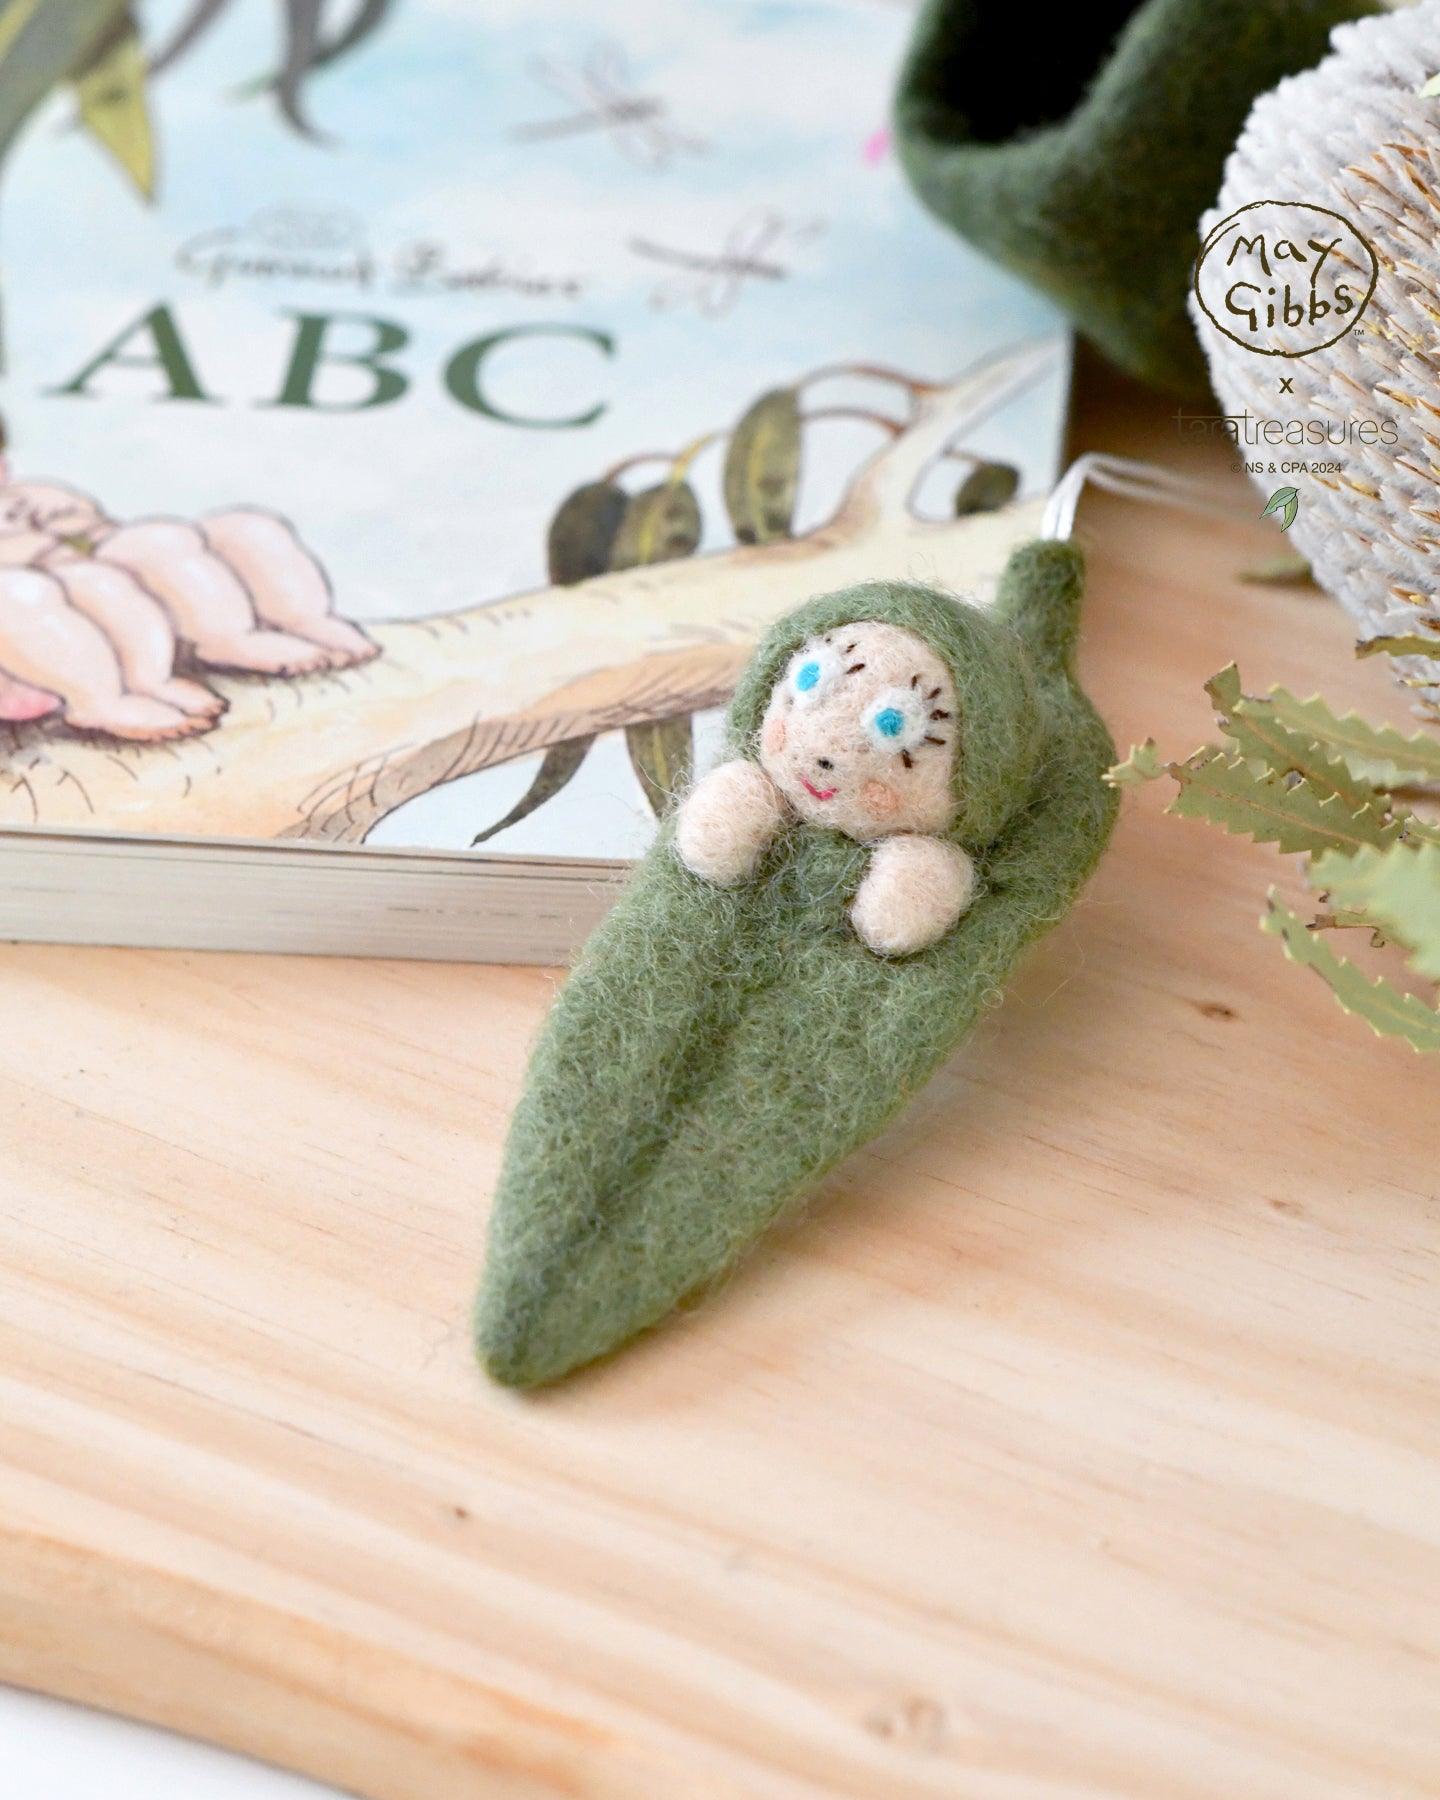 May Gibbs x Tara Treasures - Gumnut Baby Snugglepot Cuddlepie Ornament - Tara Treasures